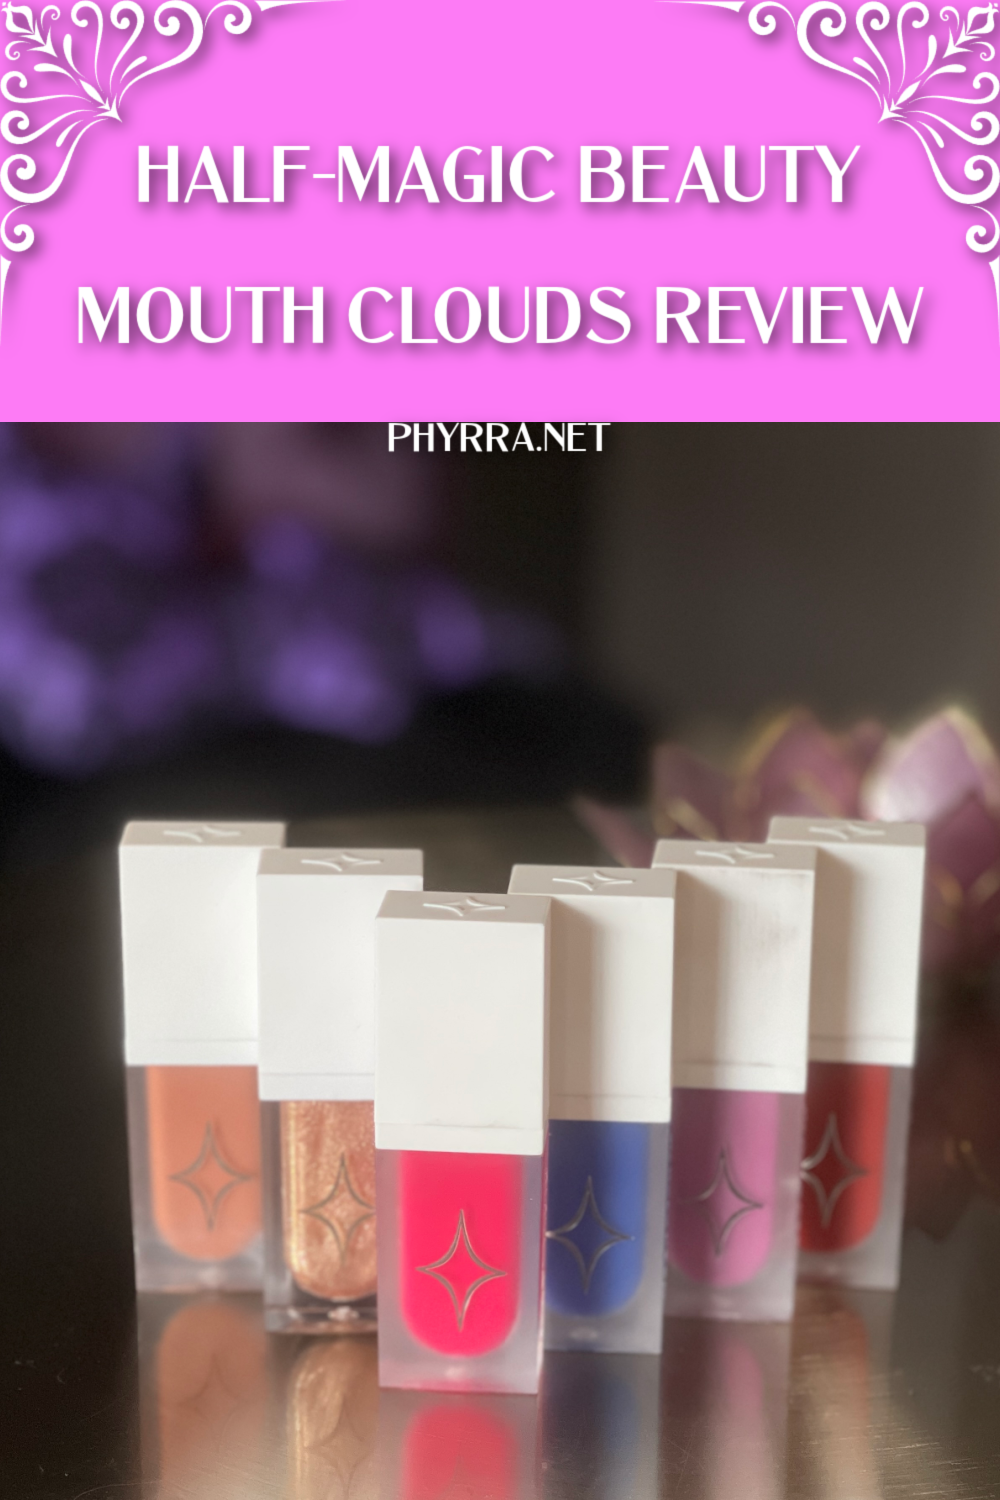 Half-Magic Mouth Cloud Soft Matte Lip Creams Review, Swatches, and Comparison